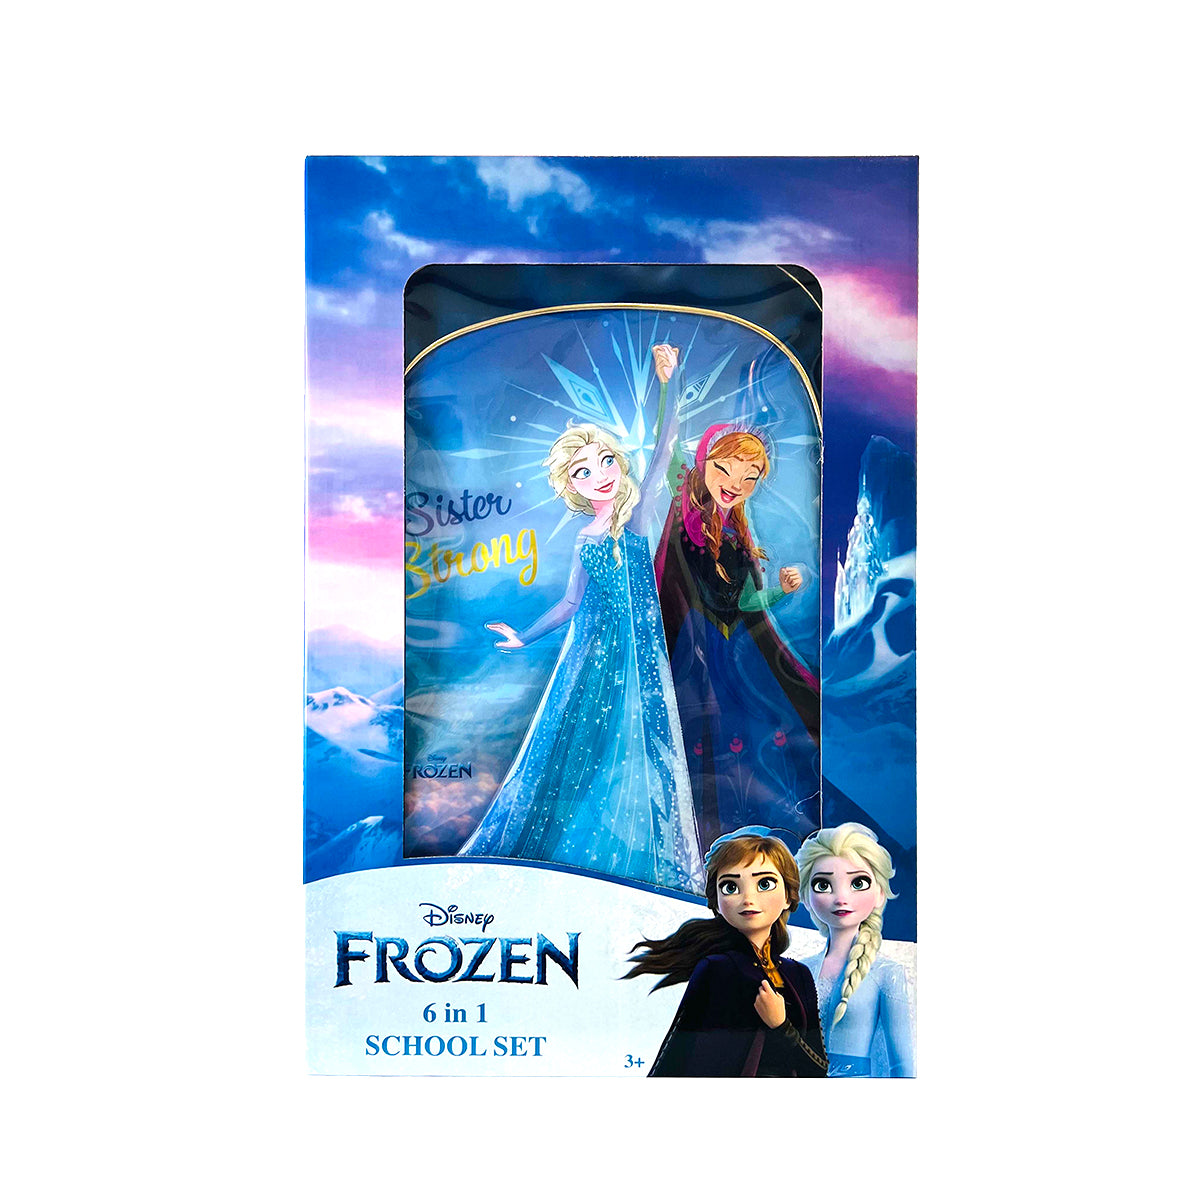 Disney Frozen Sisters Strong 18" 6-in-1 Trolley Box Set